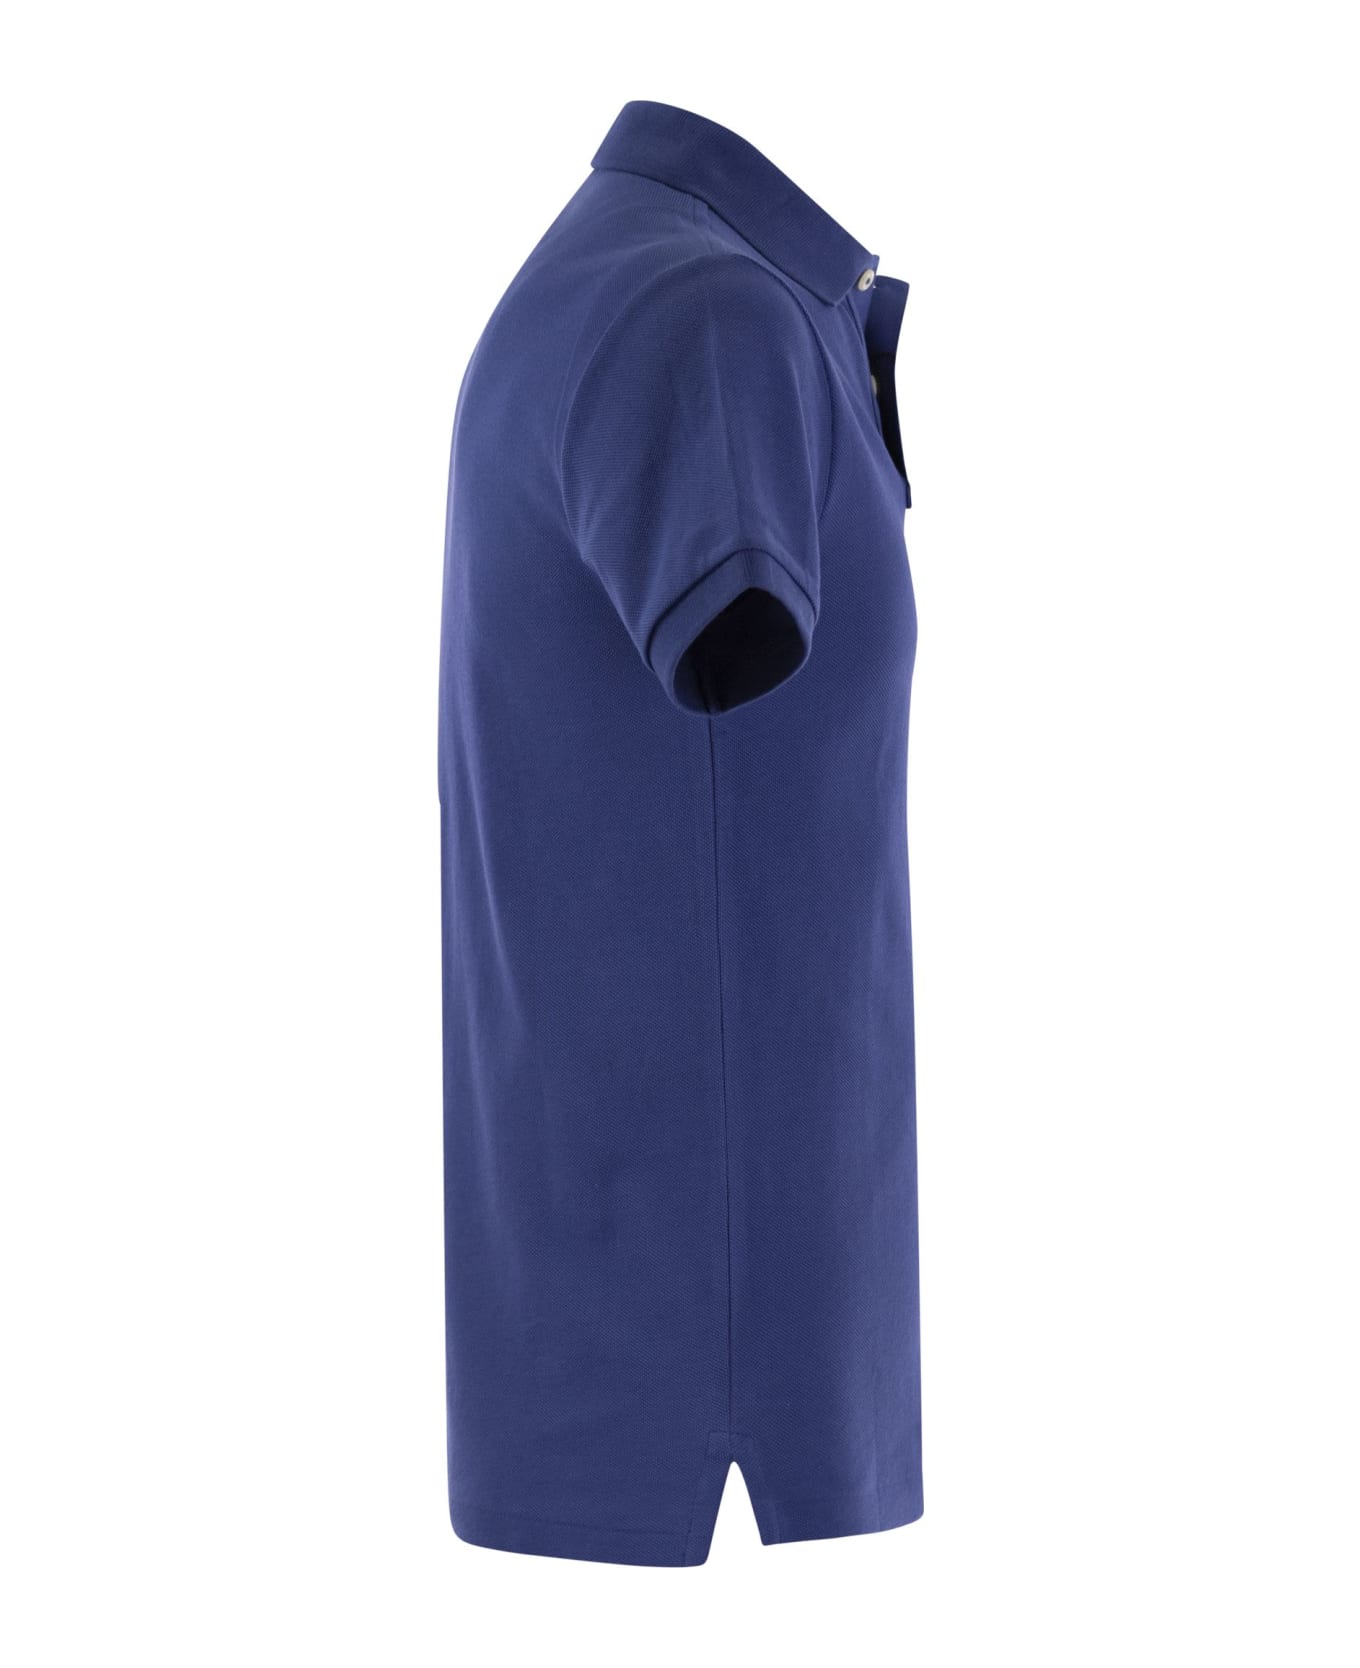 Polo Ralph Lauren Slim-fit Pique Polo Shirt - Royal Blue